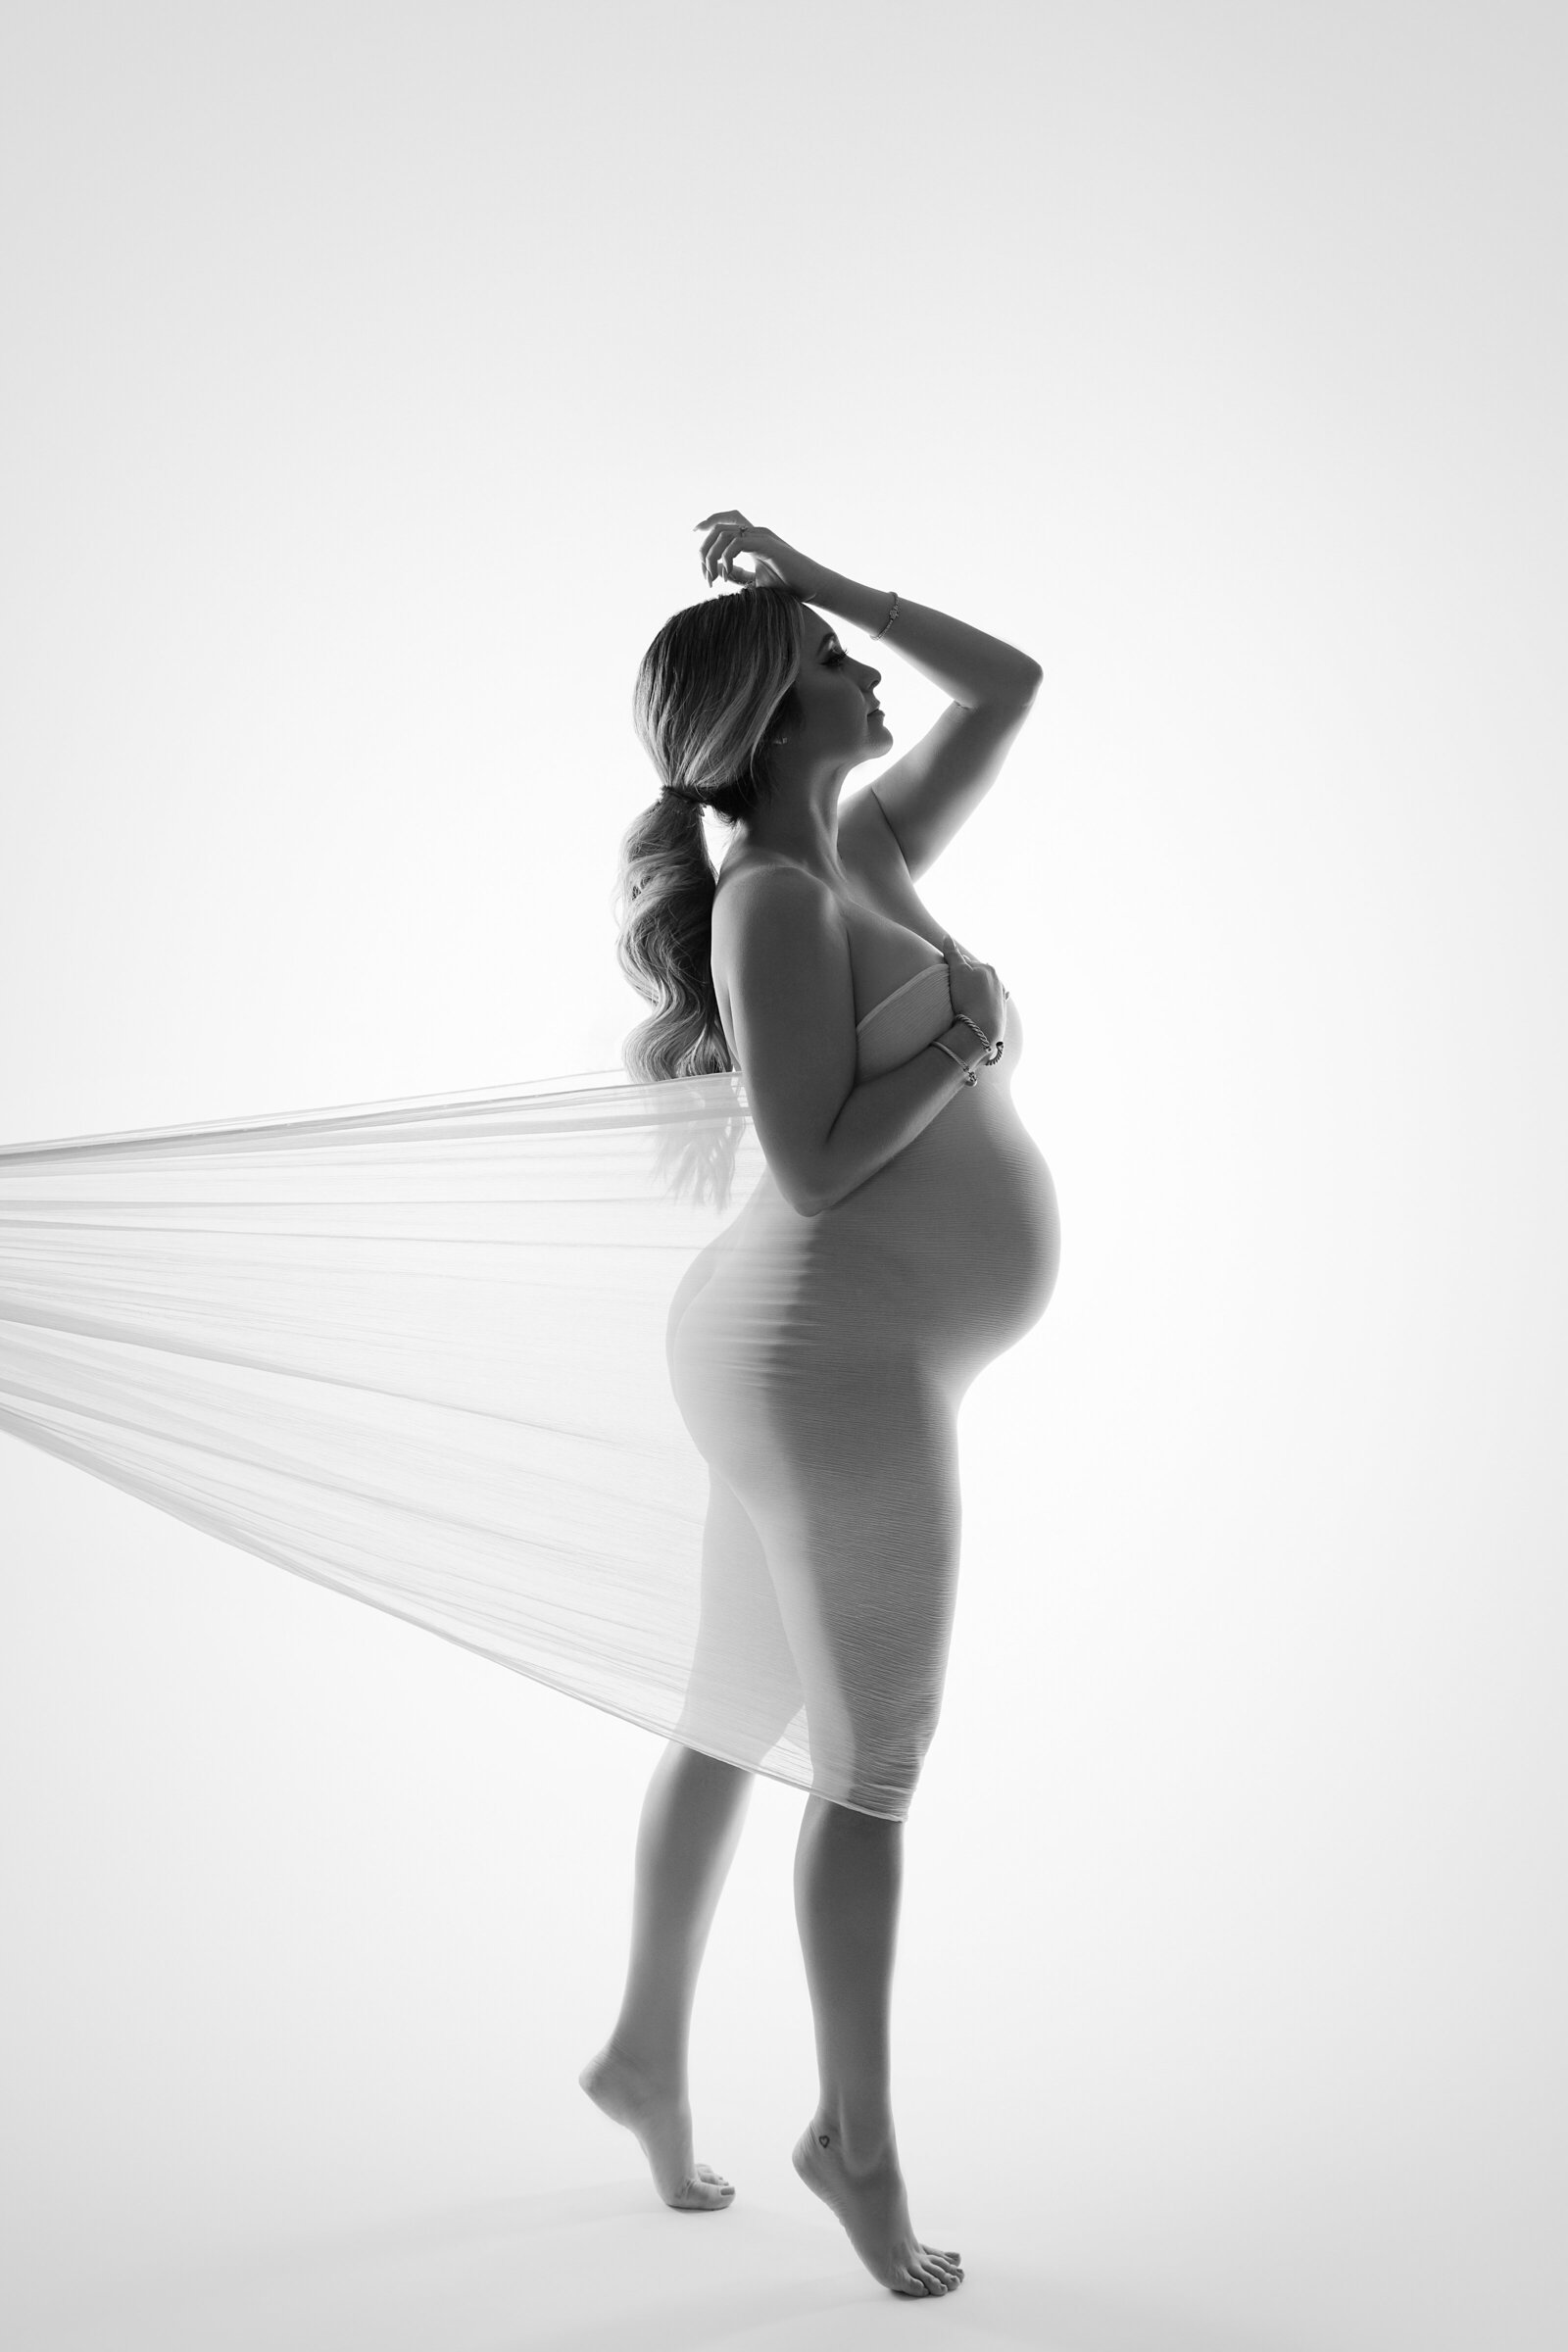 Miami Maternity nude photography